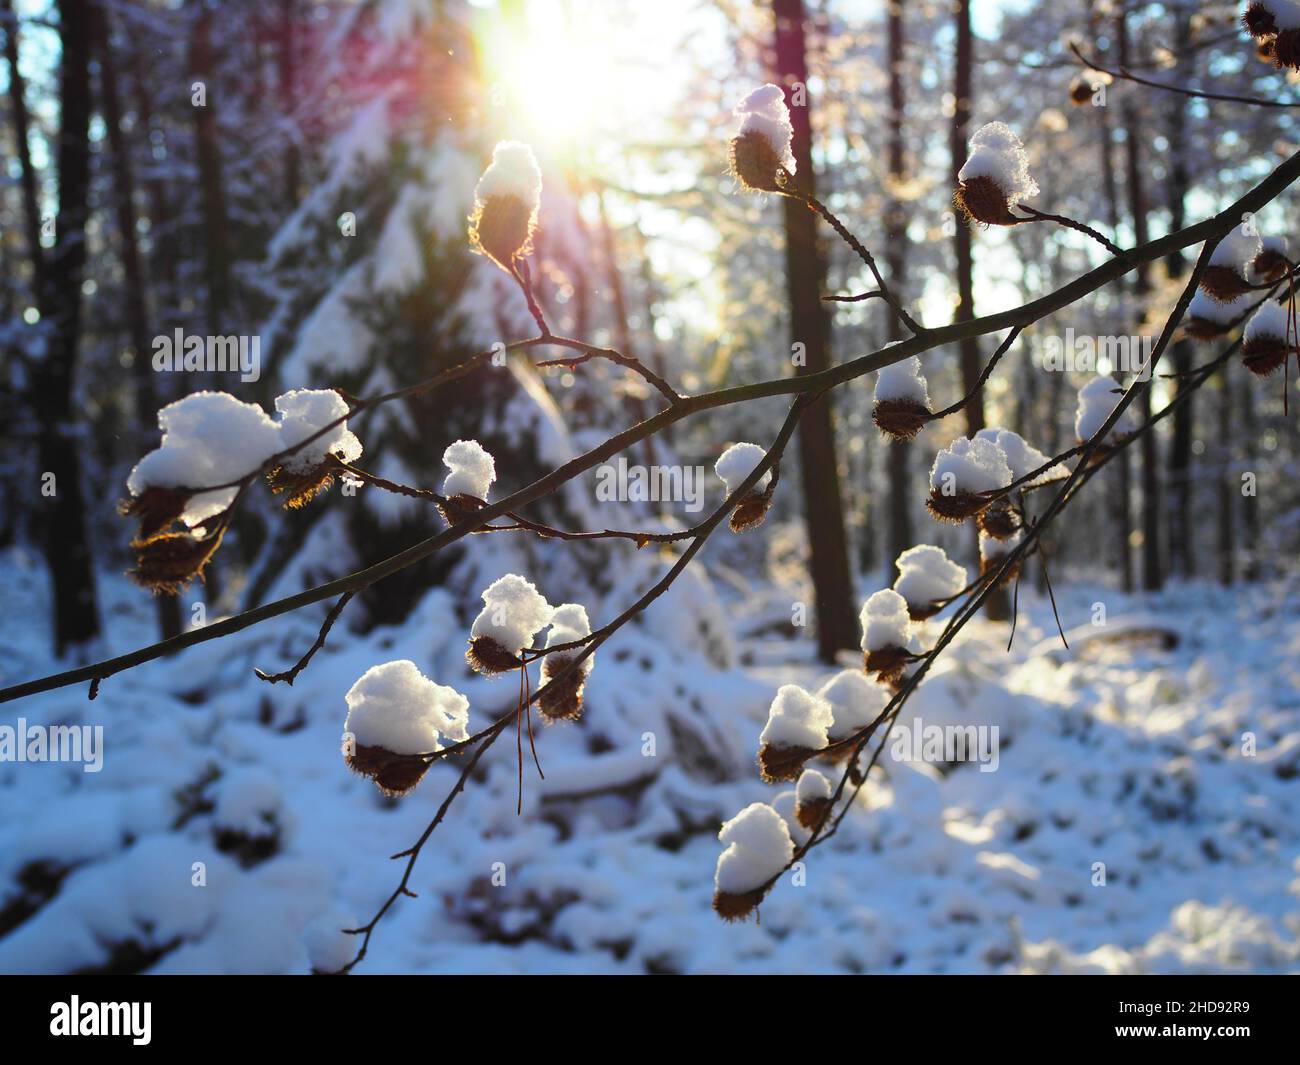 Winter Wonderland, Country Landscape Allemagne #sehnsuchtsrouten #aroundtheworld #Winter #heimat #wanderlust #hinterland #Authentic #fernweh #slowTravel Banque D'Images